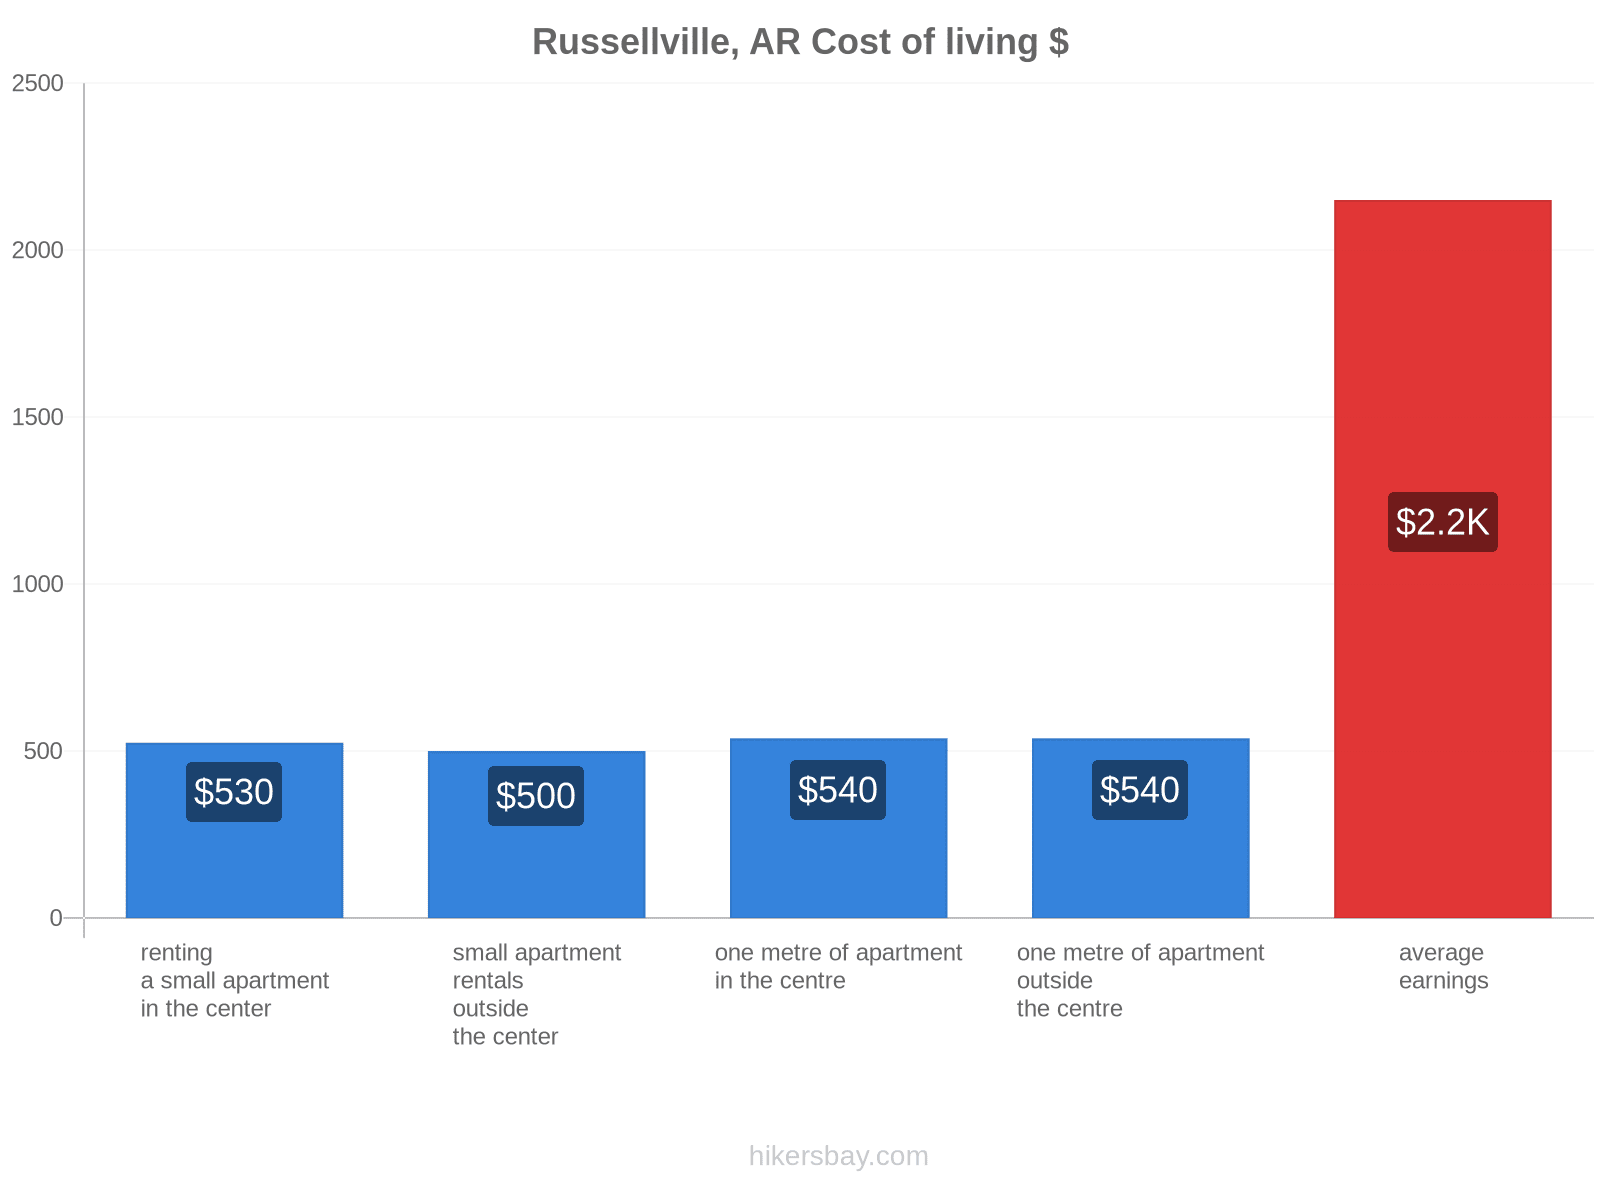 Russellville, AR cost of living hikersbay.com